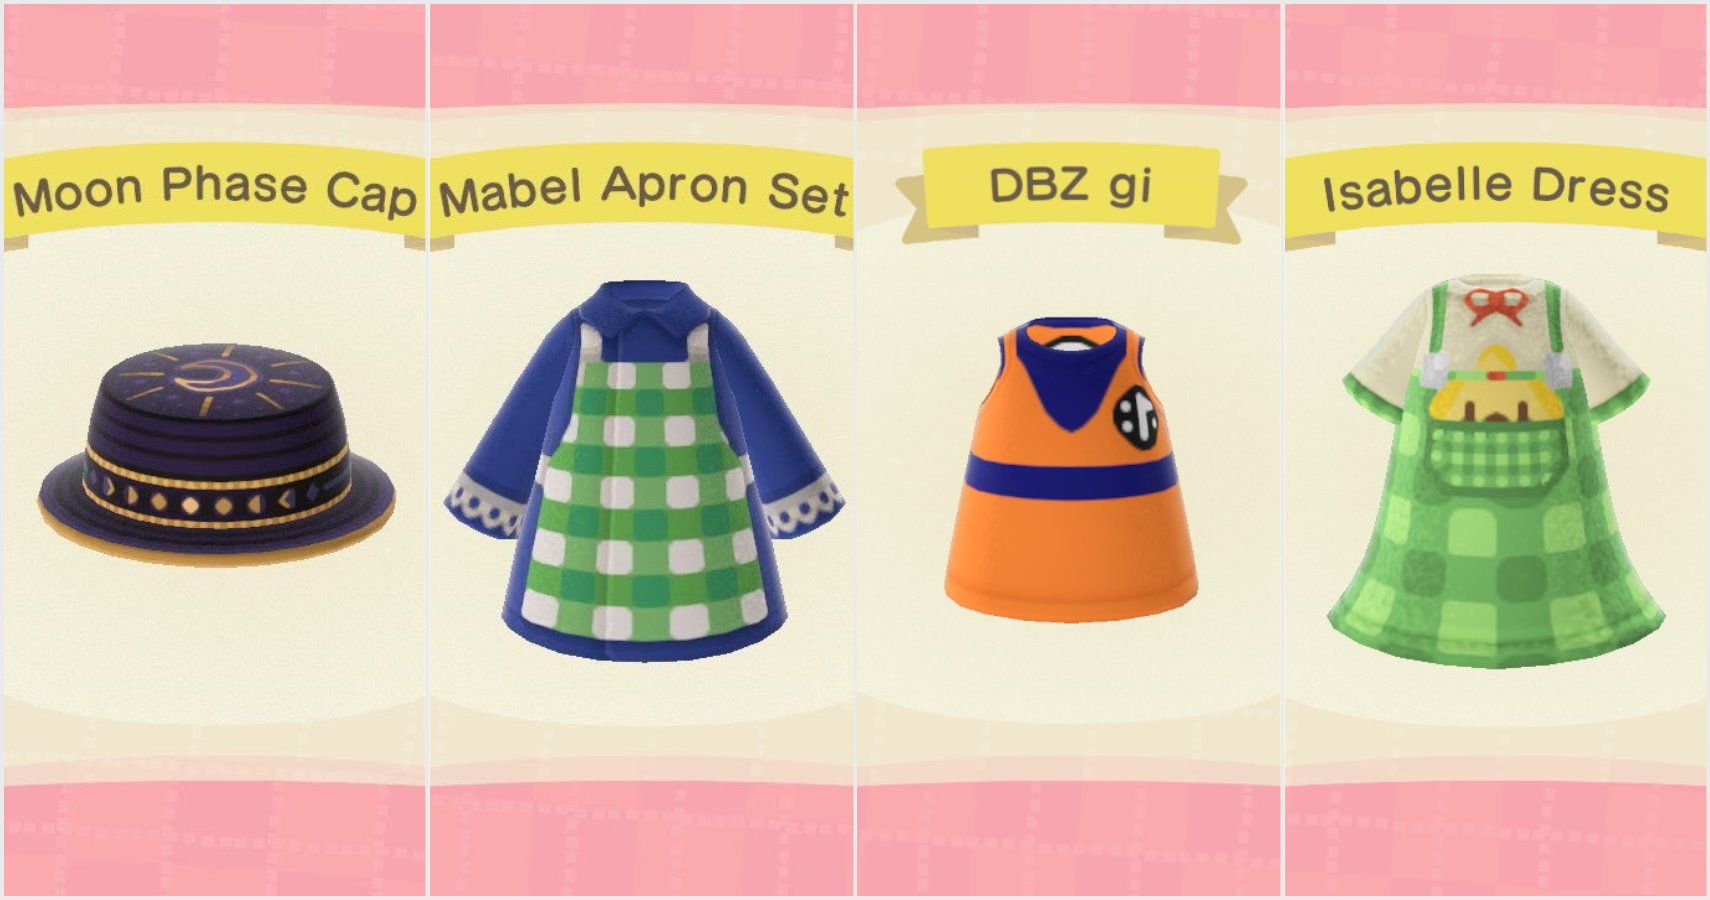 15 Awesome Animal Crossing New Horizons Custom Clothing You Need